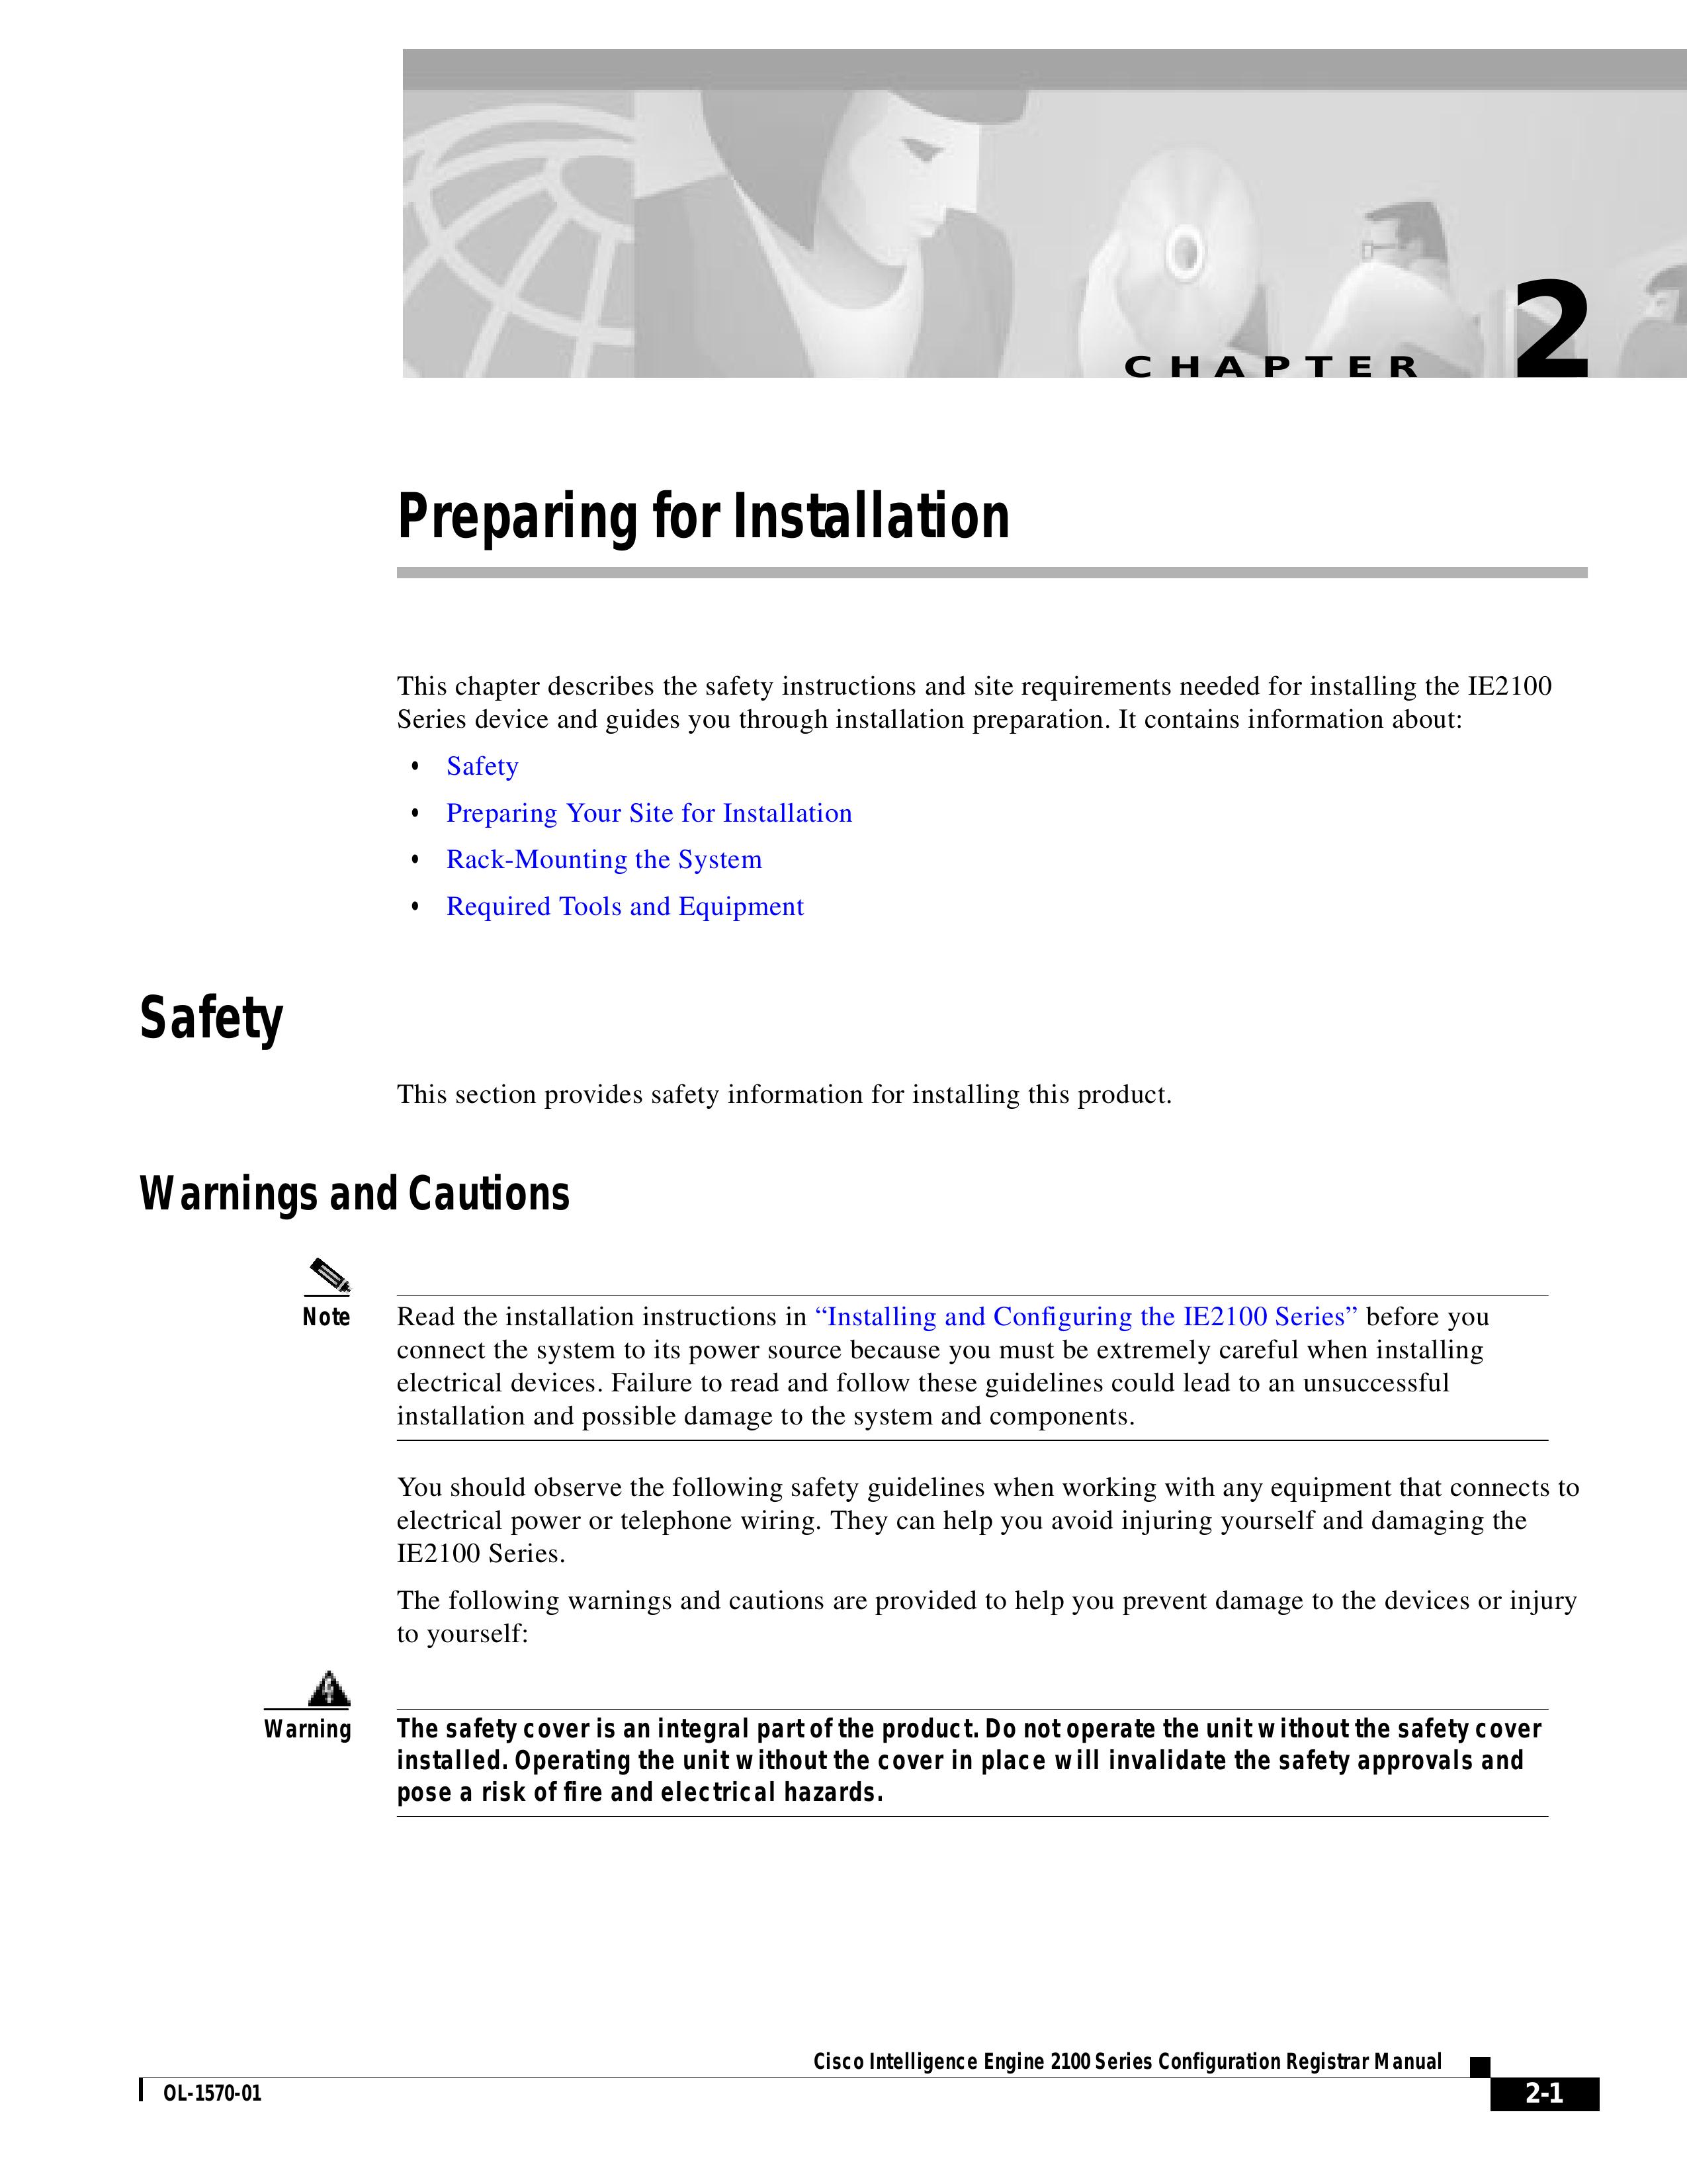 Cisco Systems 0L-1570-01 Recording Equipment User Manual